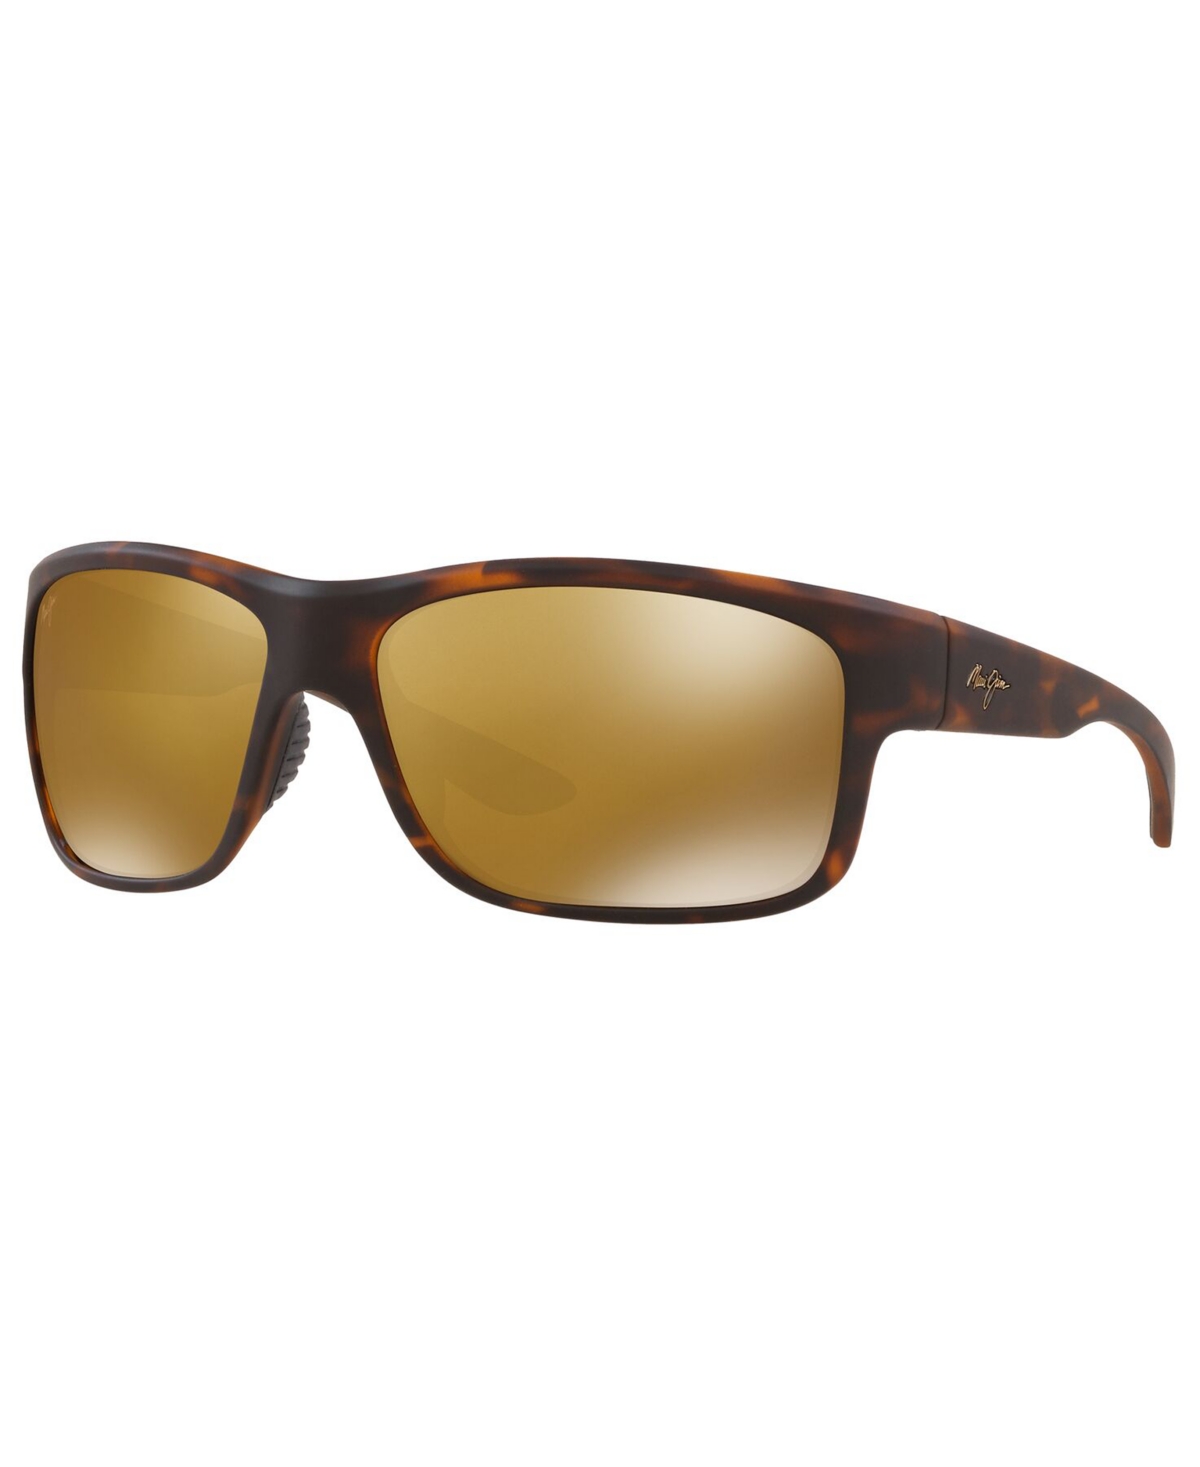 Men's Southern Cross Polarized Sunglasses - BROWN MATTE/GREEN POLAR